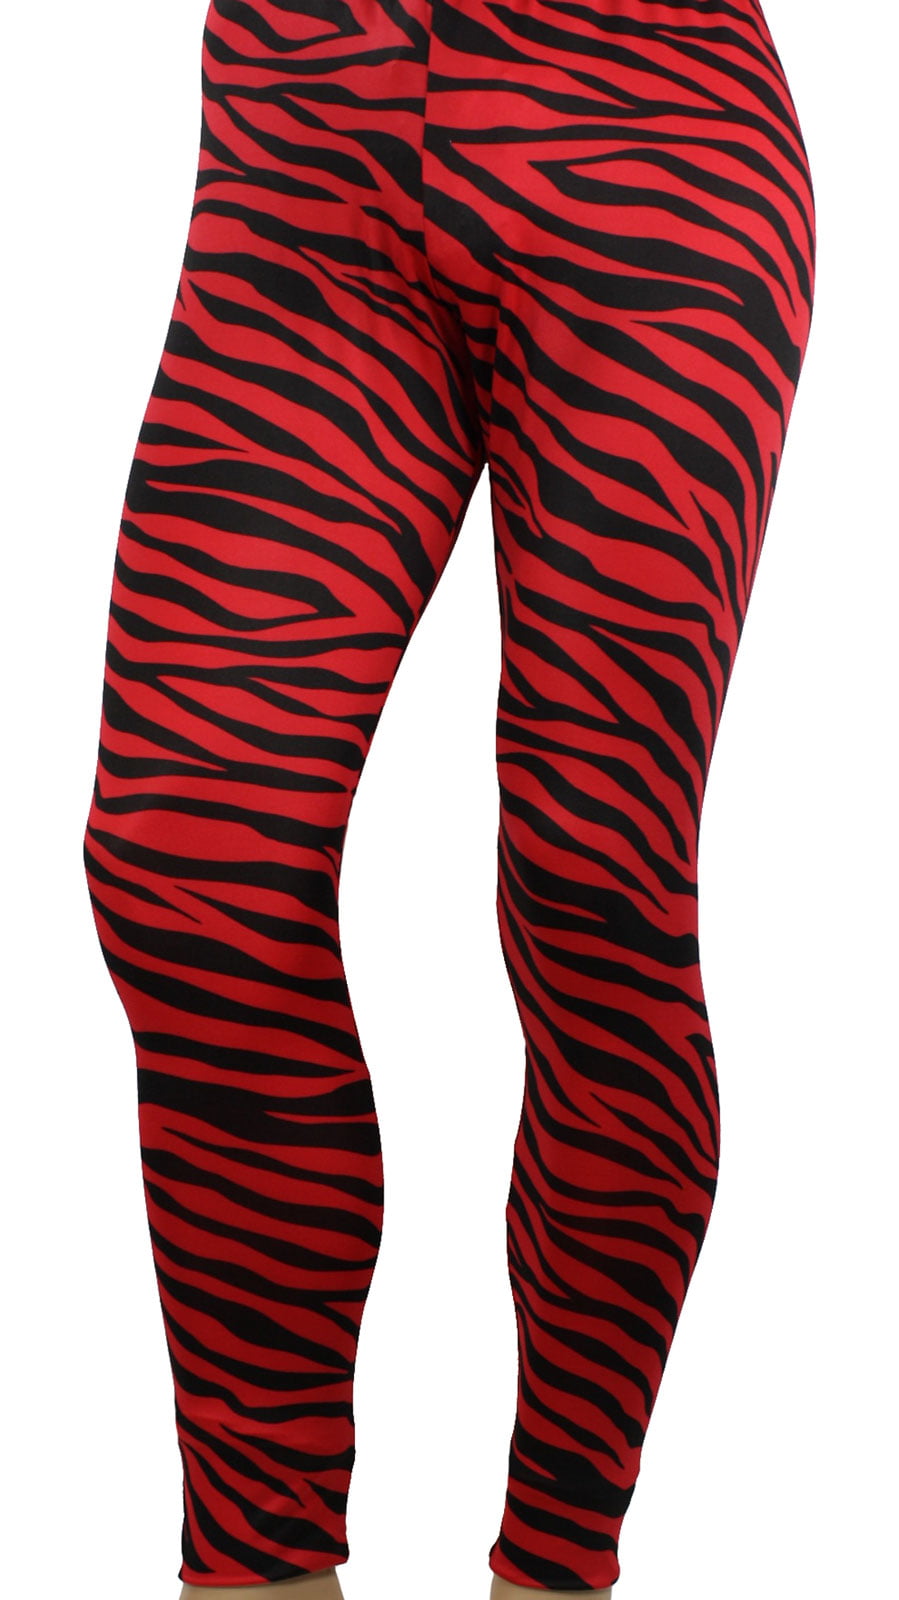 Red Zebra Print Men's Spandex Stretch Pants Large 